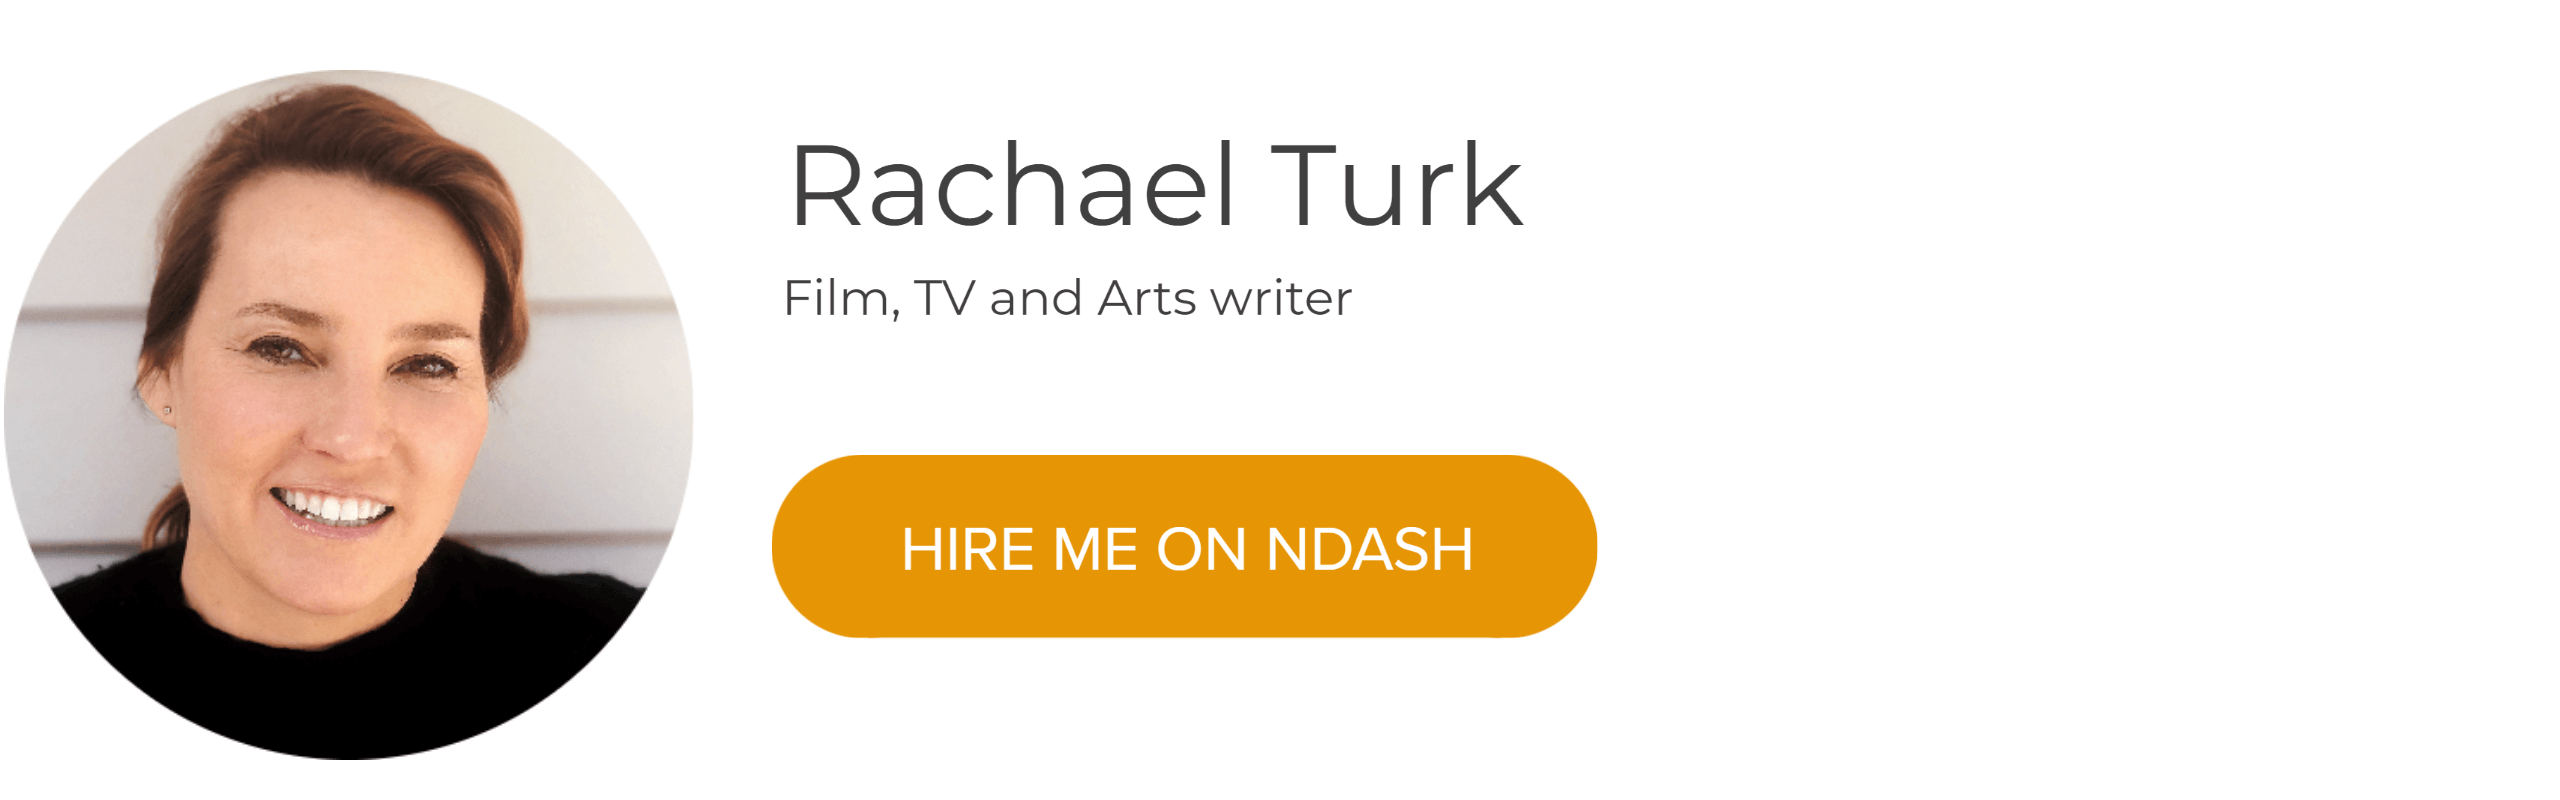 Wednesday Writer Roundup - Meet Rachael Turk : Film, TV & Arts Writer